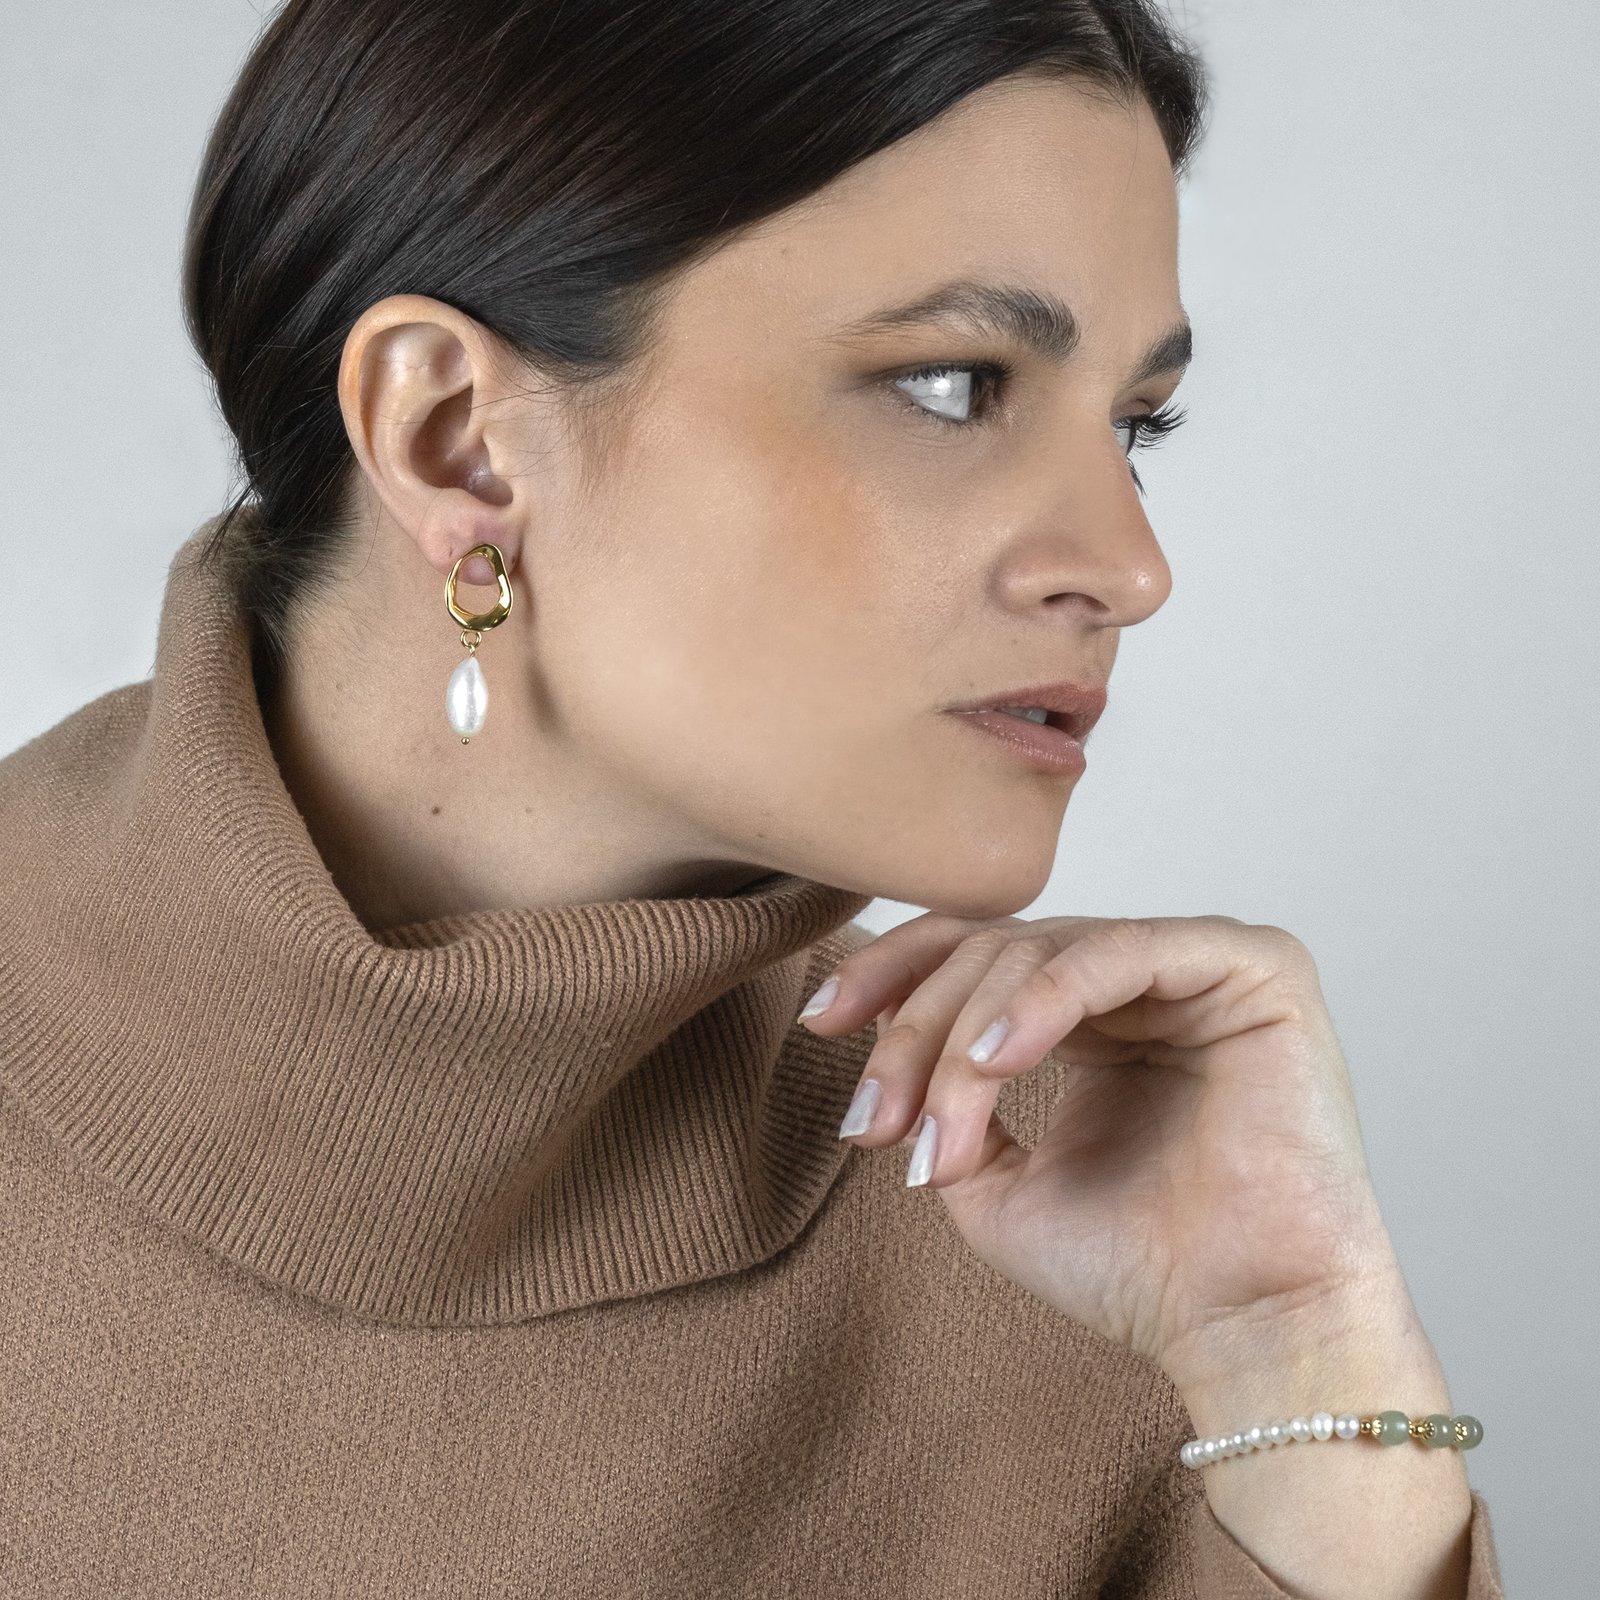 woman looking sideways showing her pearl drop earrings and bracelet